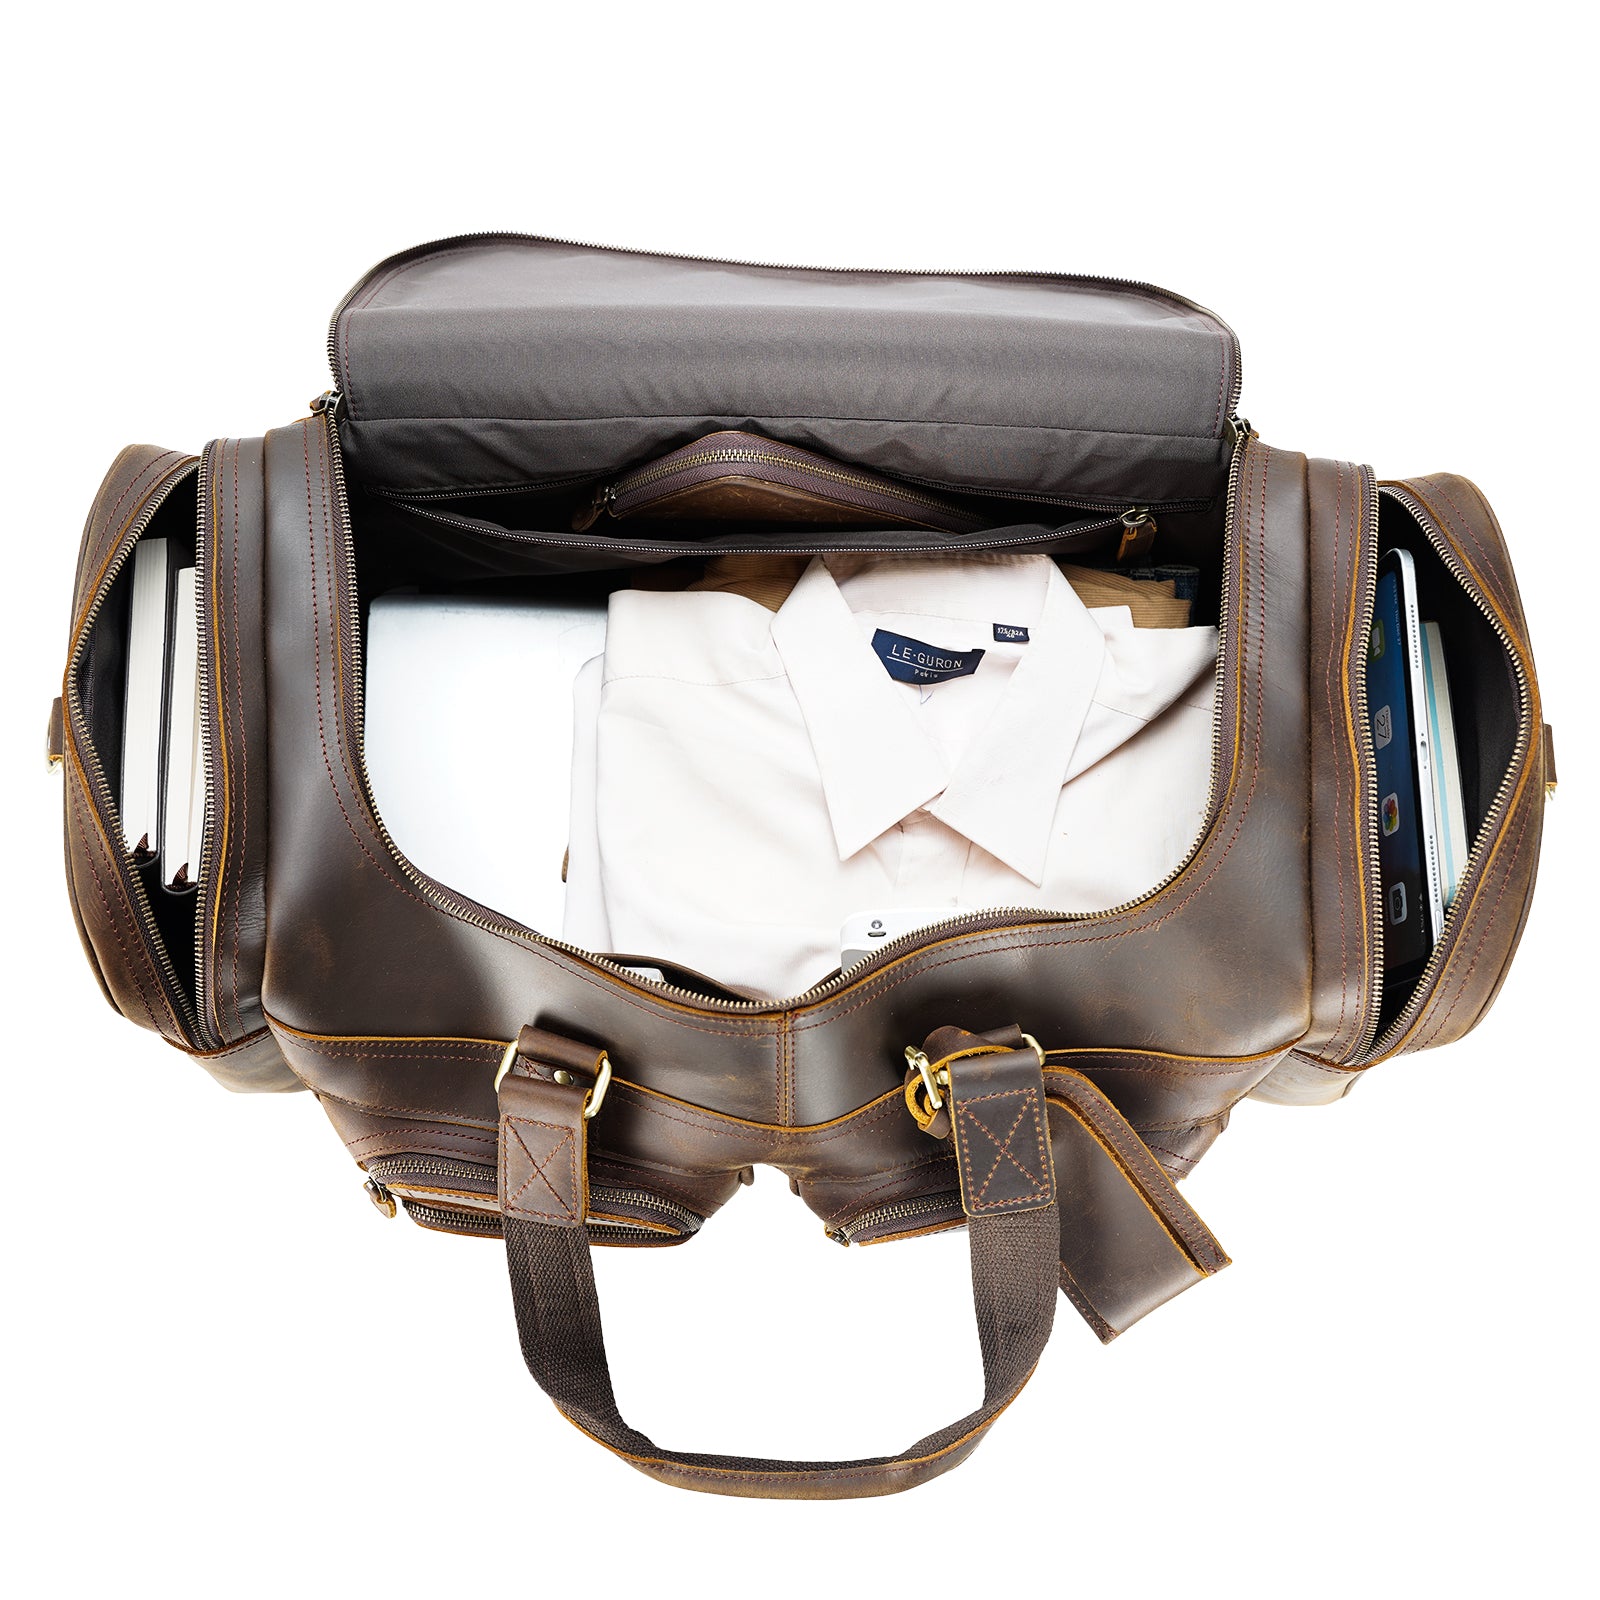 Polare 23" Full Grain Leather Duffel Weekender Travel Bag (Inside)